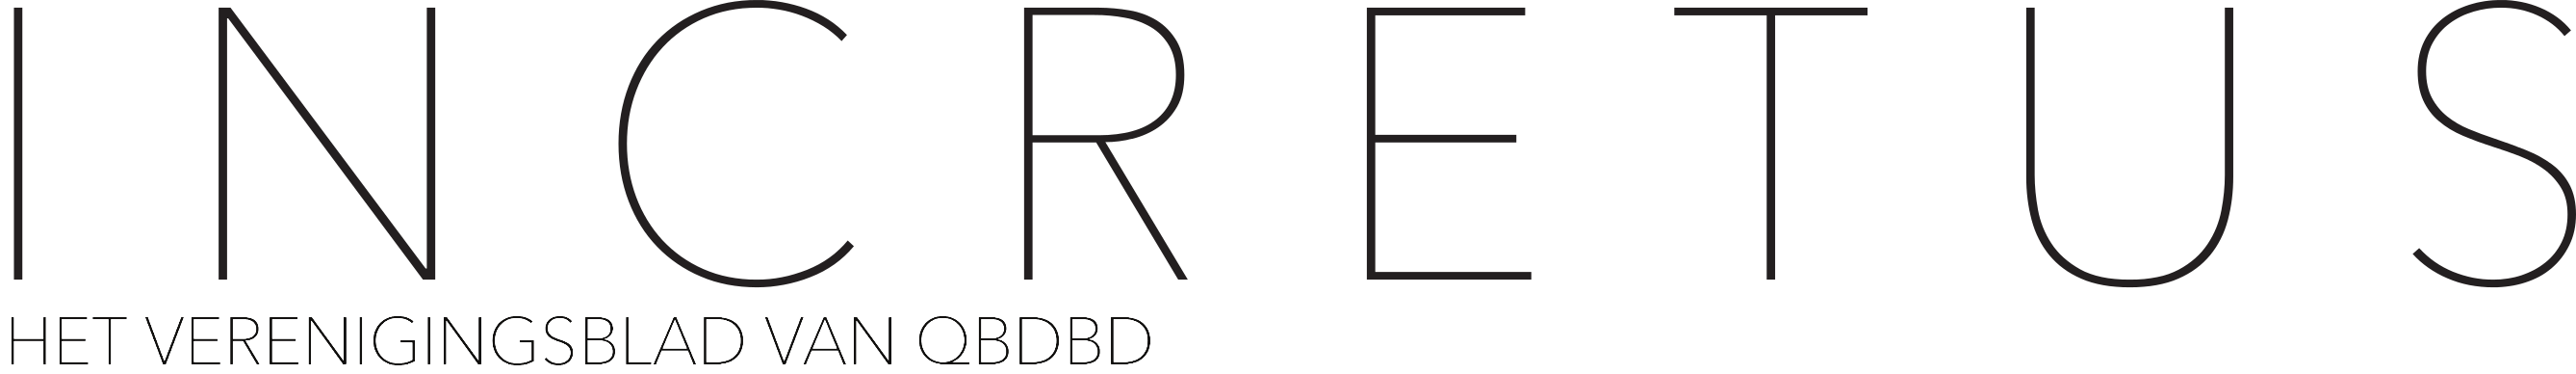 Logo QBDBD